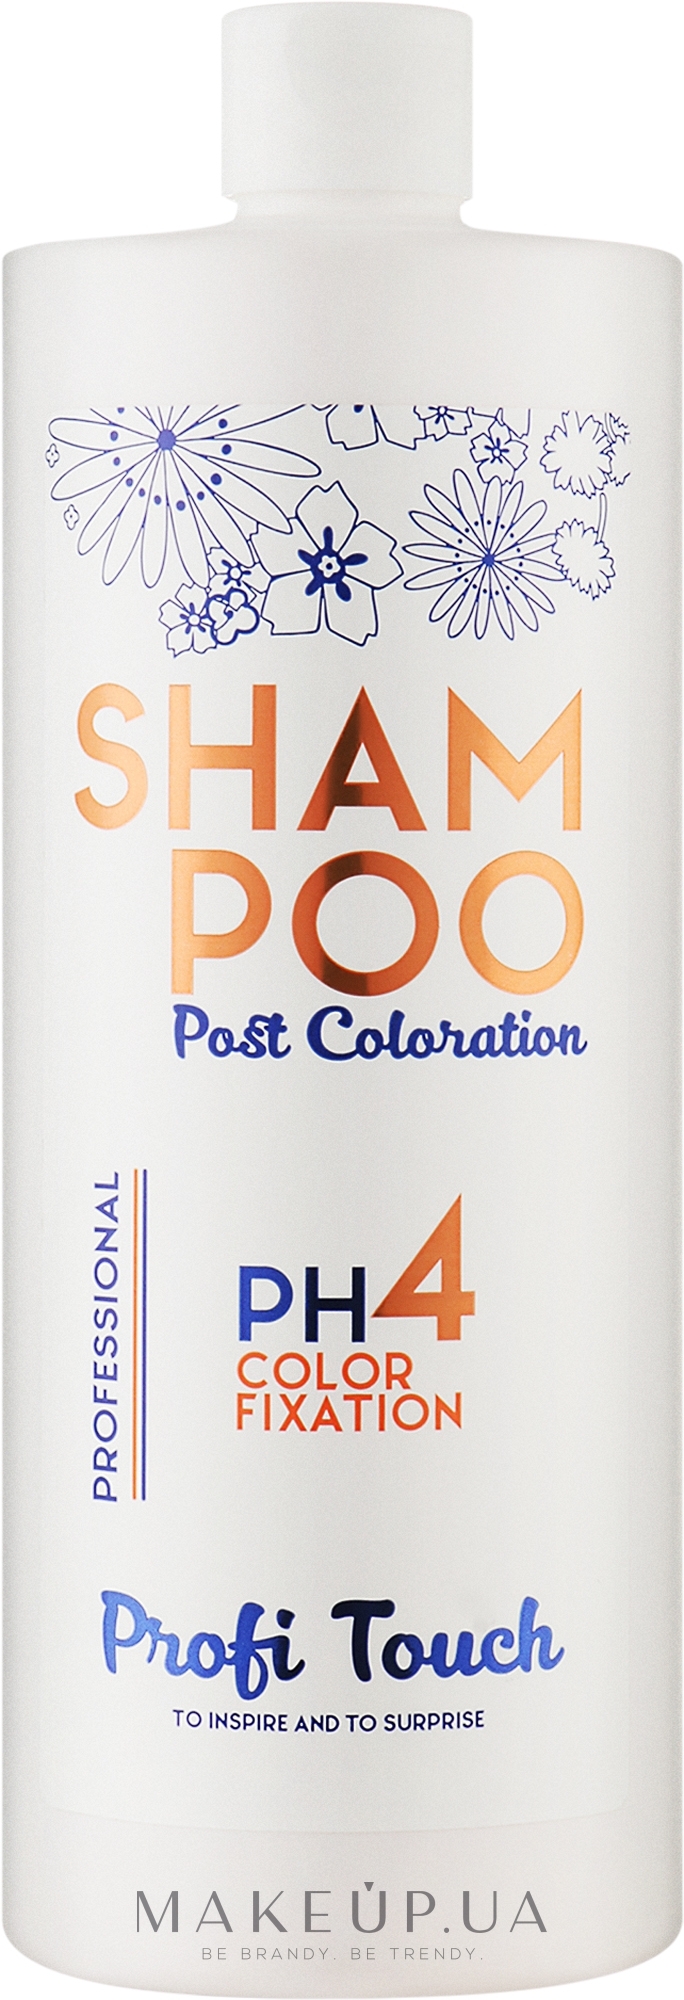 Шампунь для волос "PH 4" - Profi Touch Shampoo Post Coloration — фото 1000ml